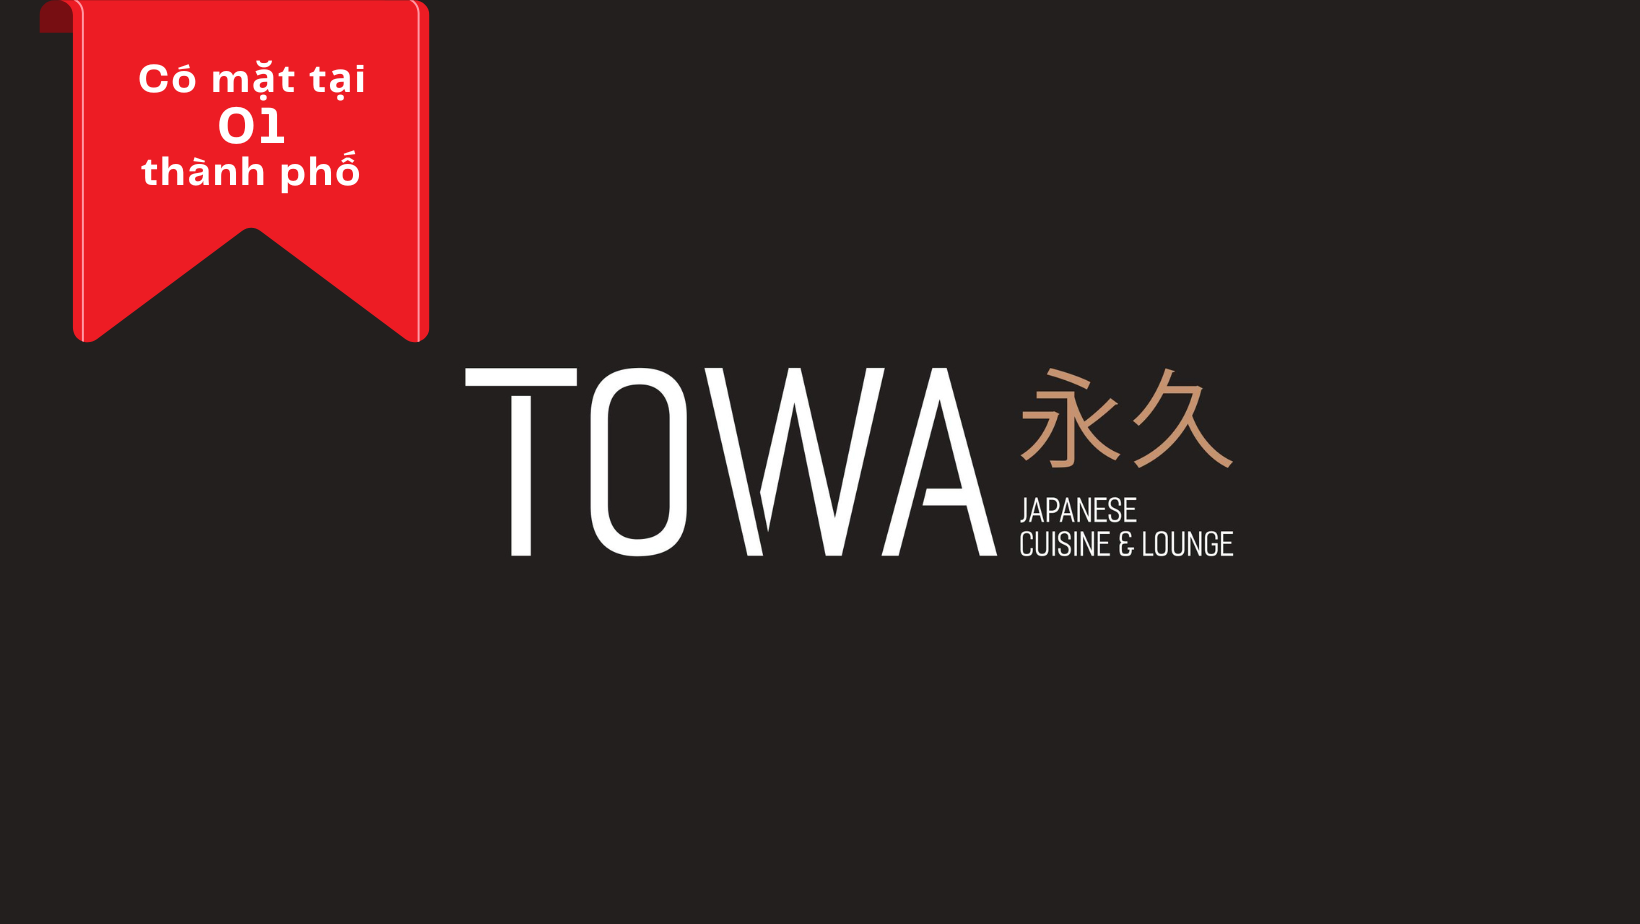 TOWA - Japanese Cuisine & Lounge – Chiết khấu 15%